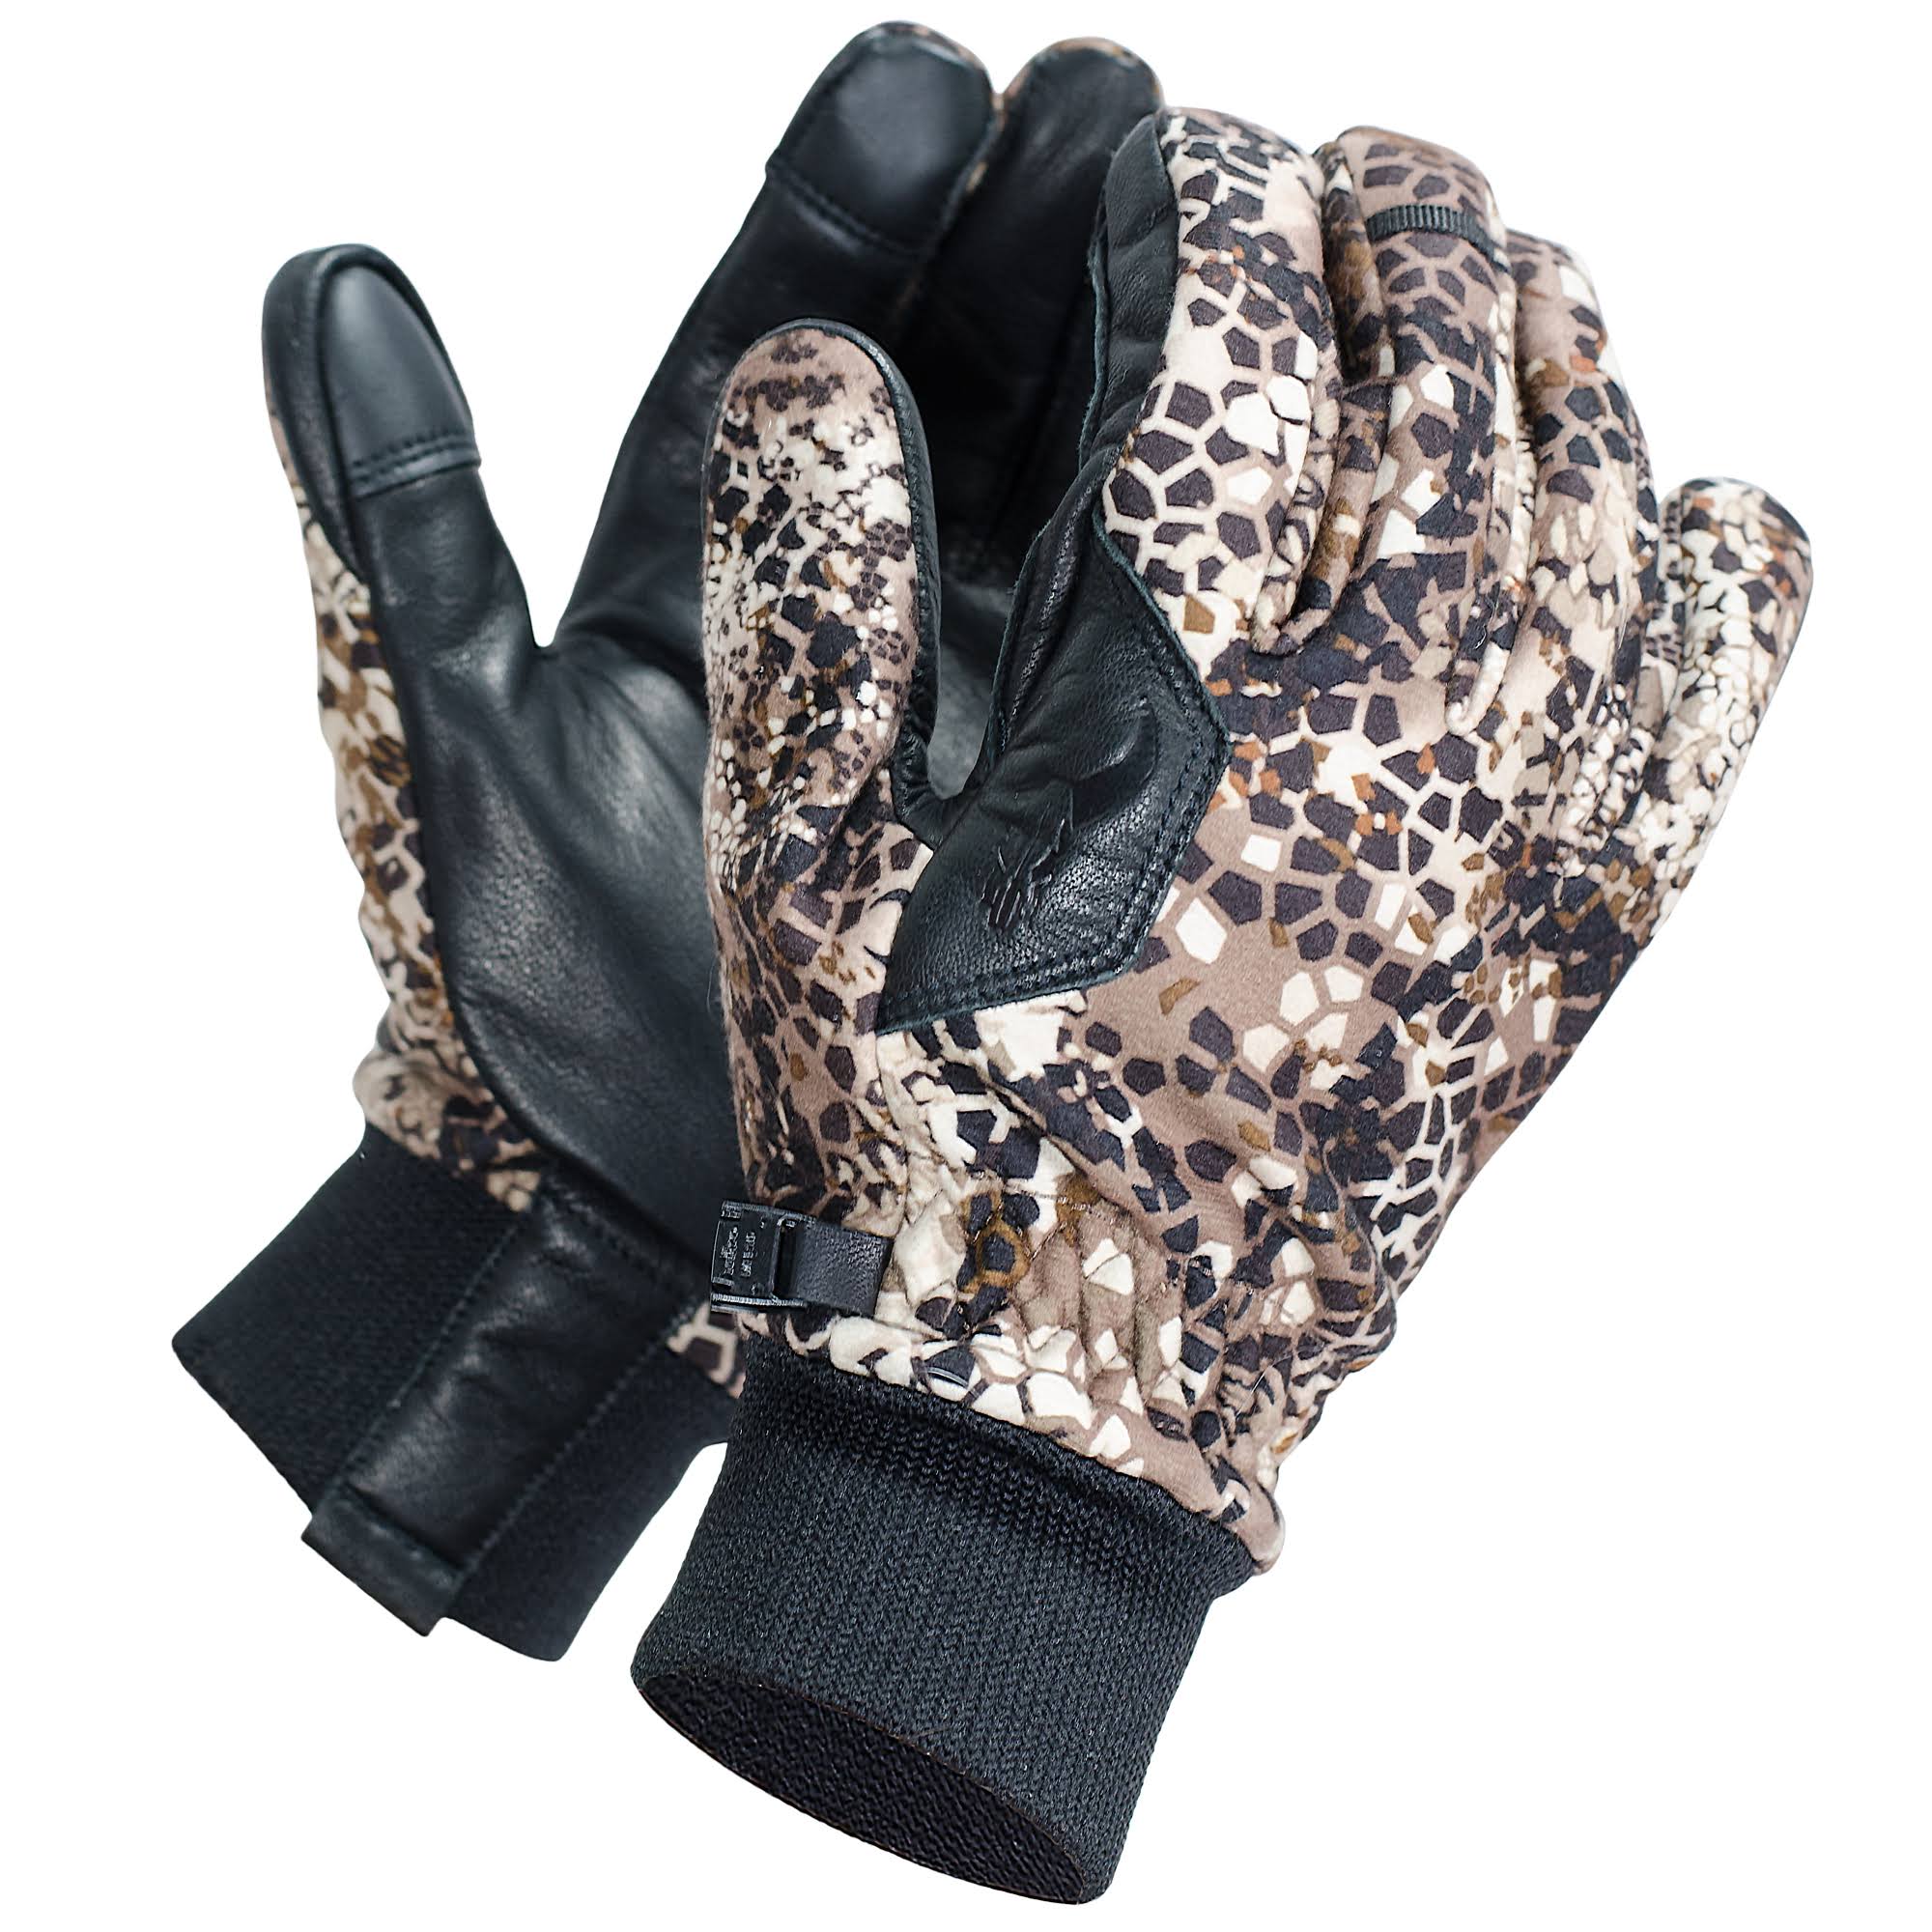 Badlands Hybrid Glove - Approach FX, Large